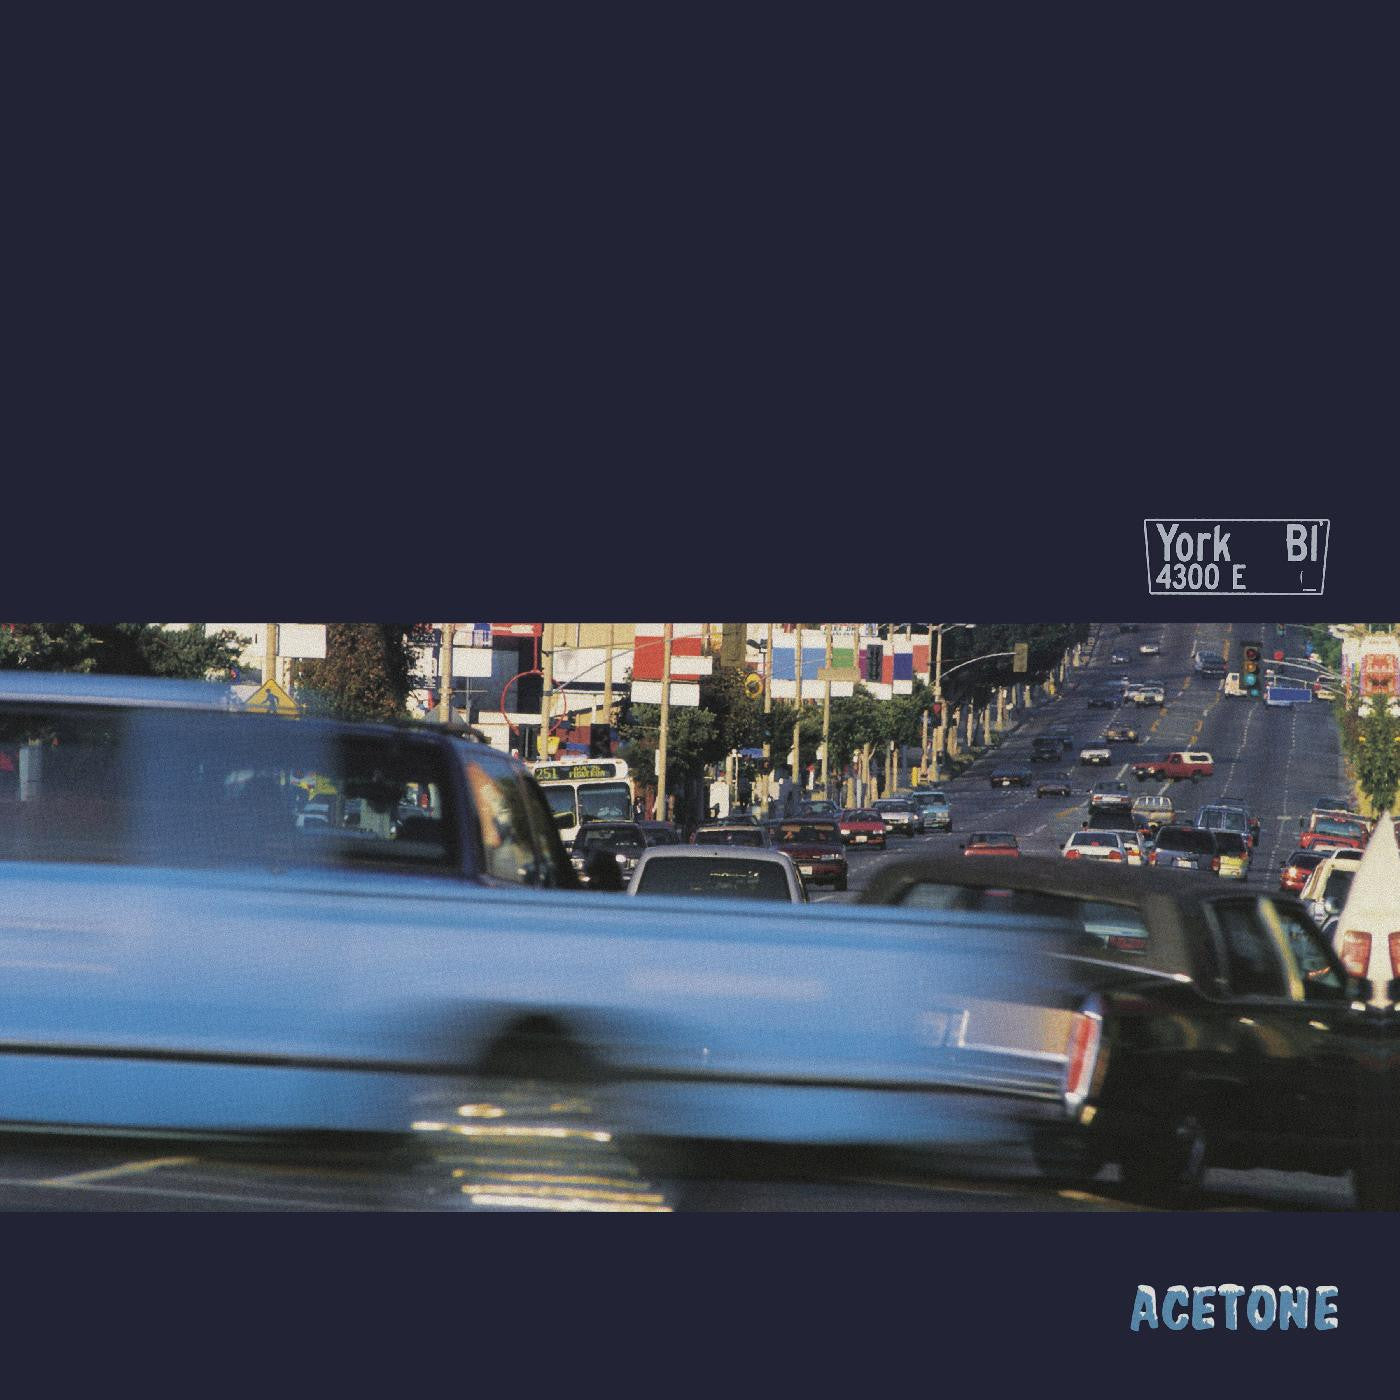 ACETONE - YORK BLVD Vinyl 2xLP